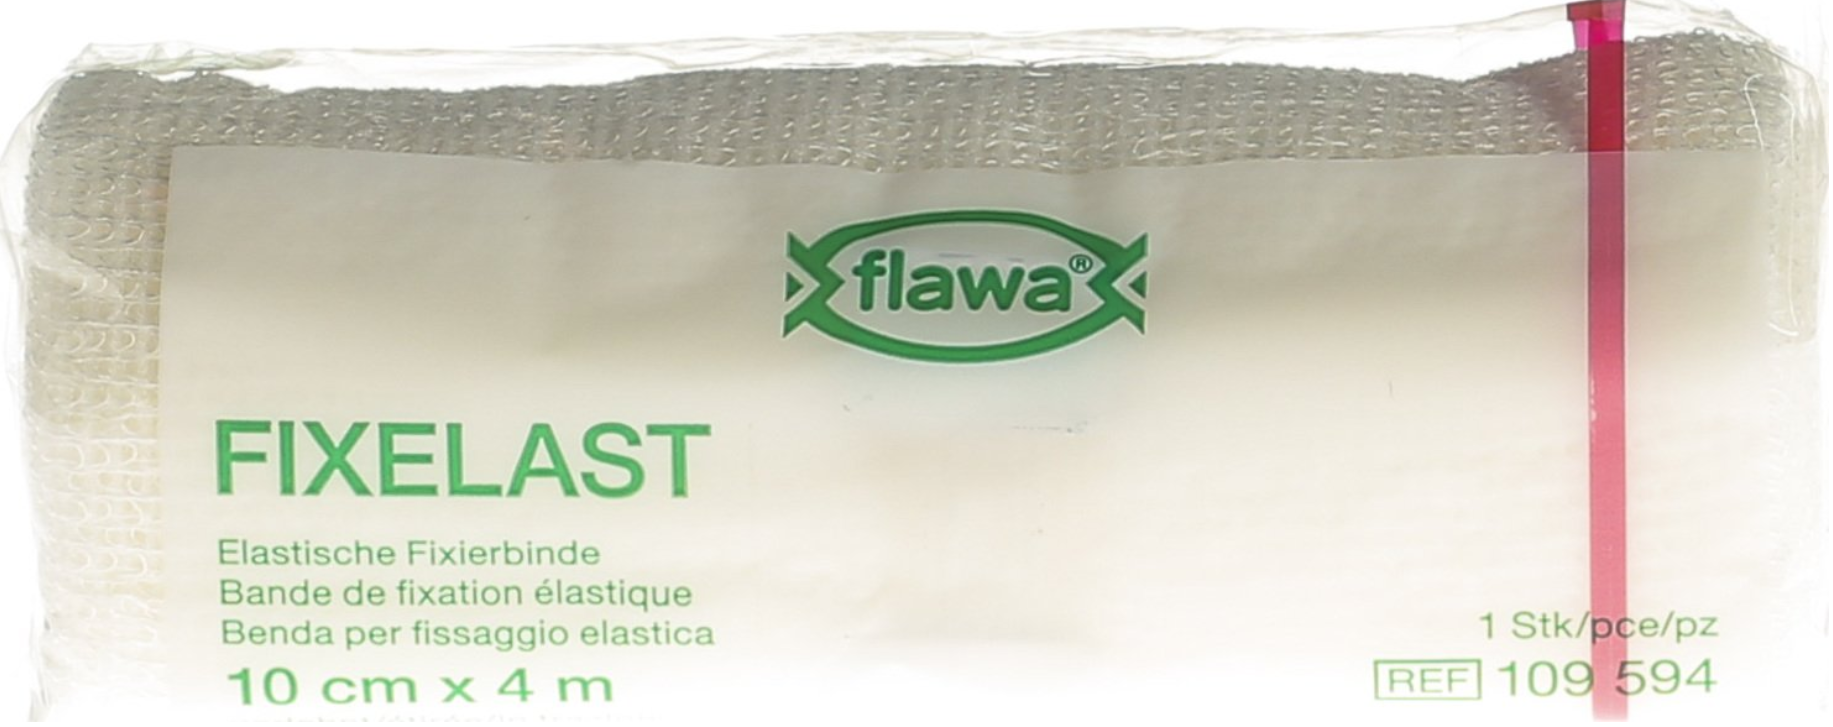 Image of FLAWA Fixelast Fixierbinde 10cmx4m (20 Stk)